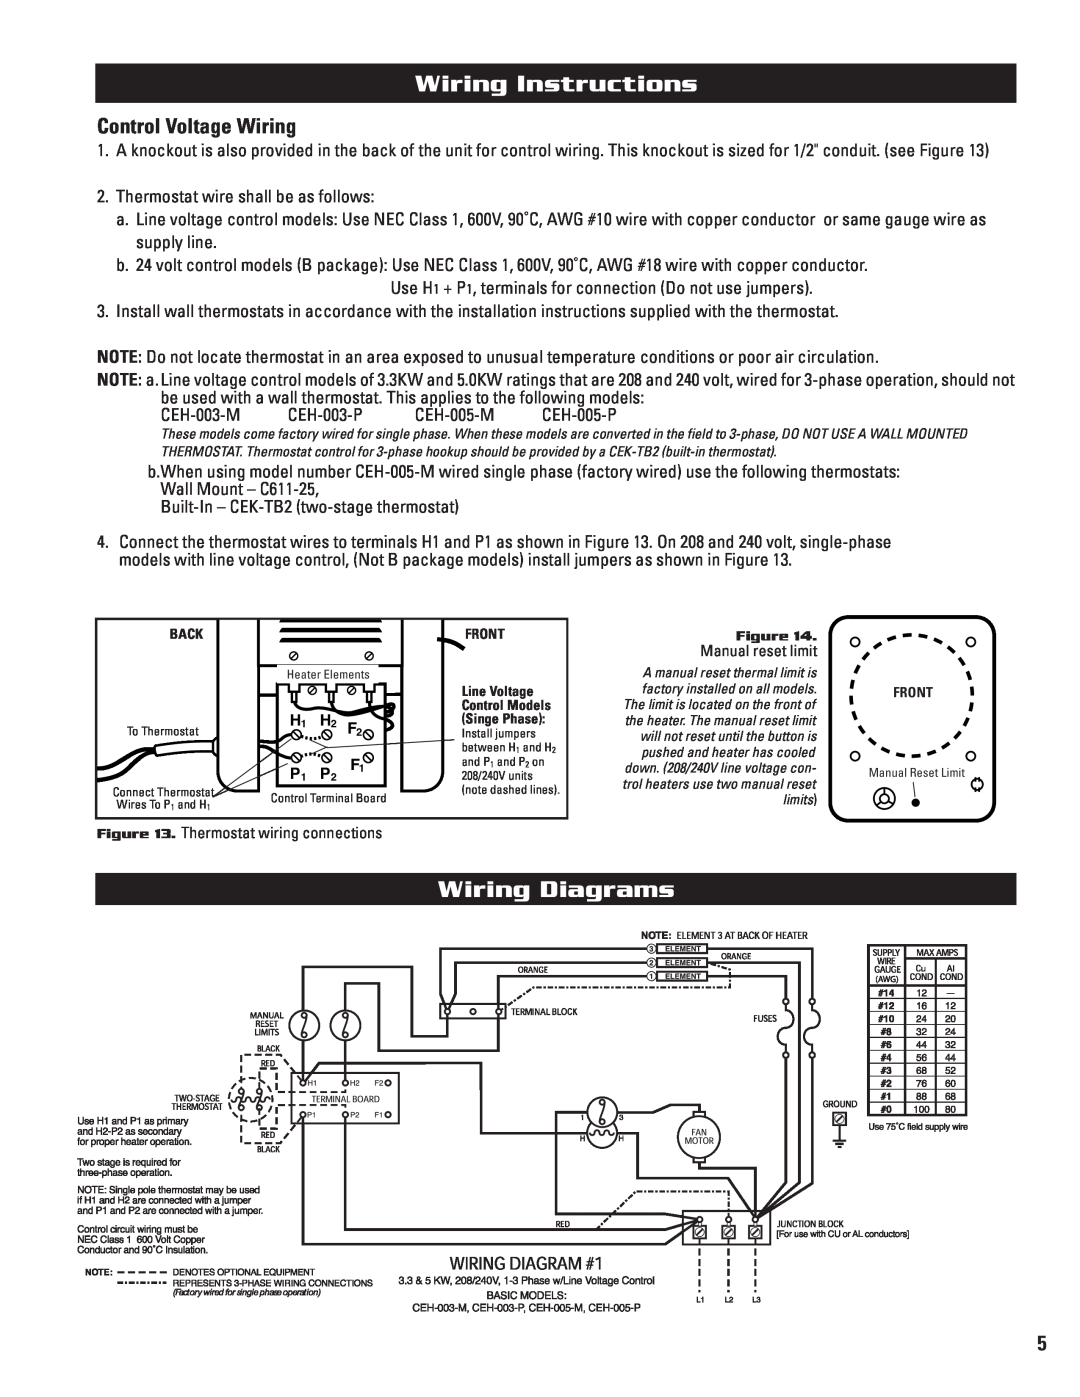 Cadet CEH-003PB, CEH-005MB, CEH-003R, CEH-005PB, CEH-003M Wiring Diagrams, Control Voltage Wiring, Wiring Instructions 